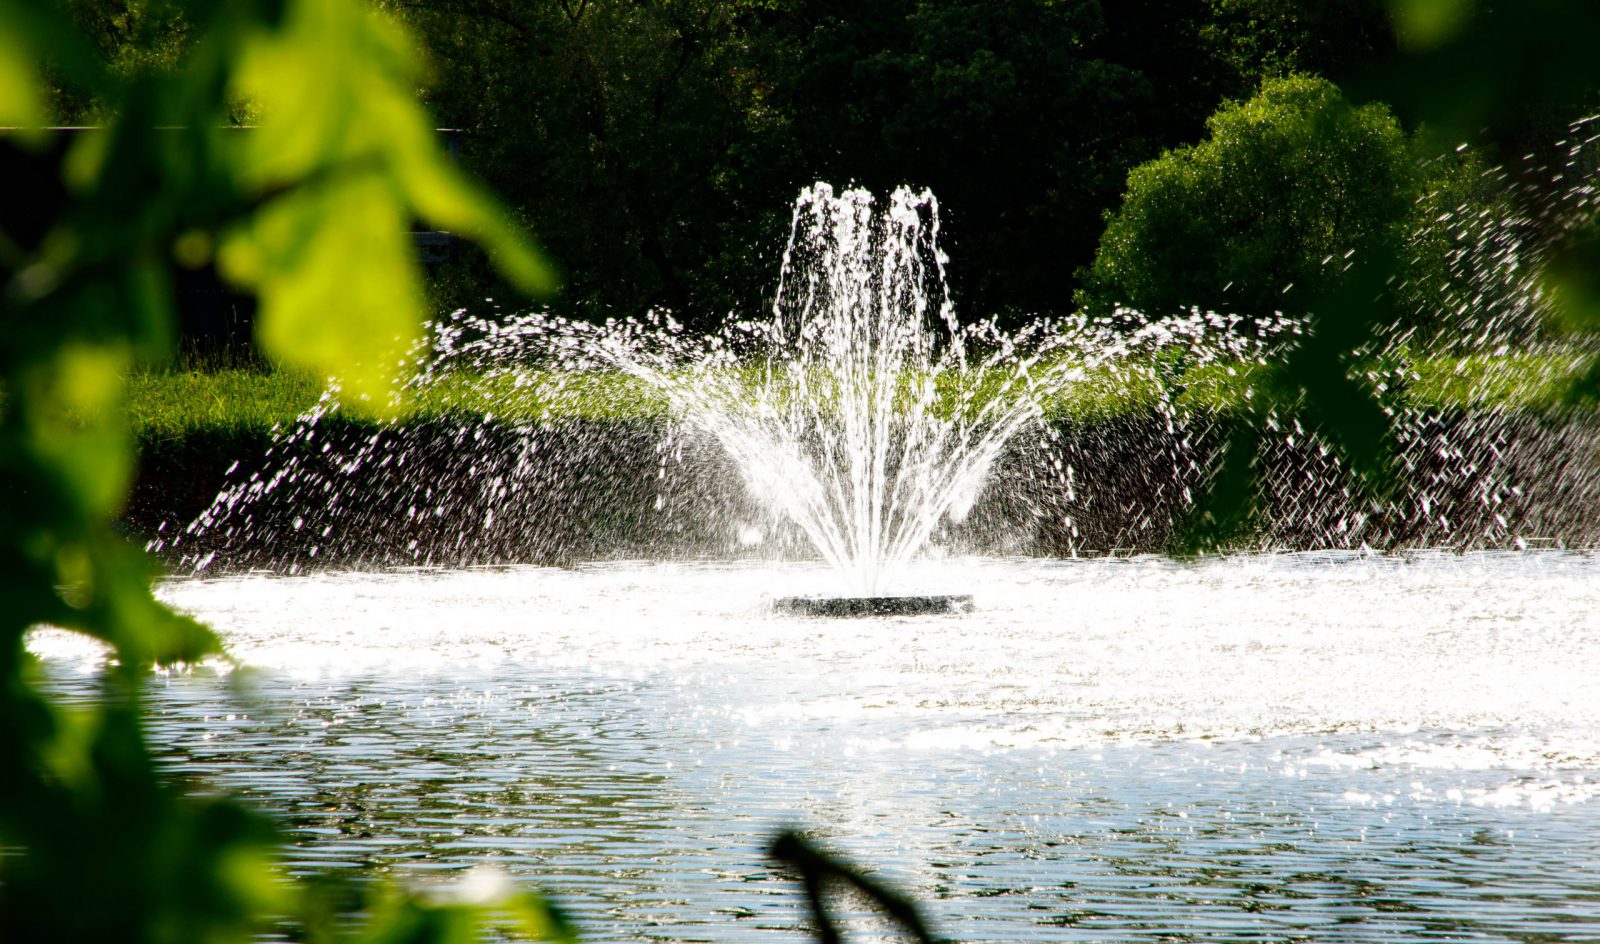 33 artemis - bearon - vendor partner solitude lake management fountains and aeration services